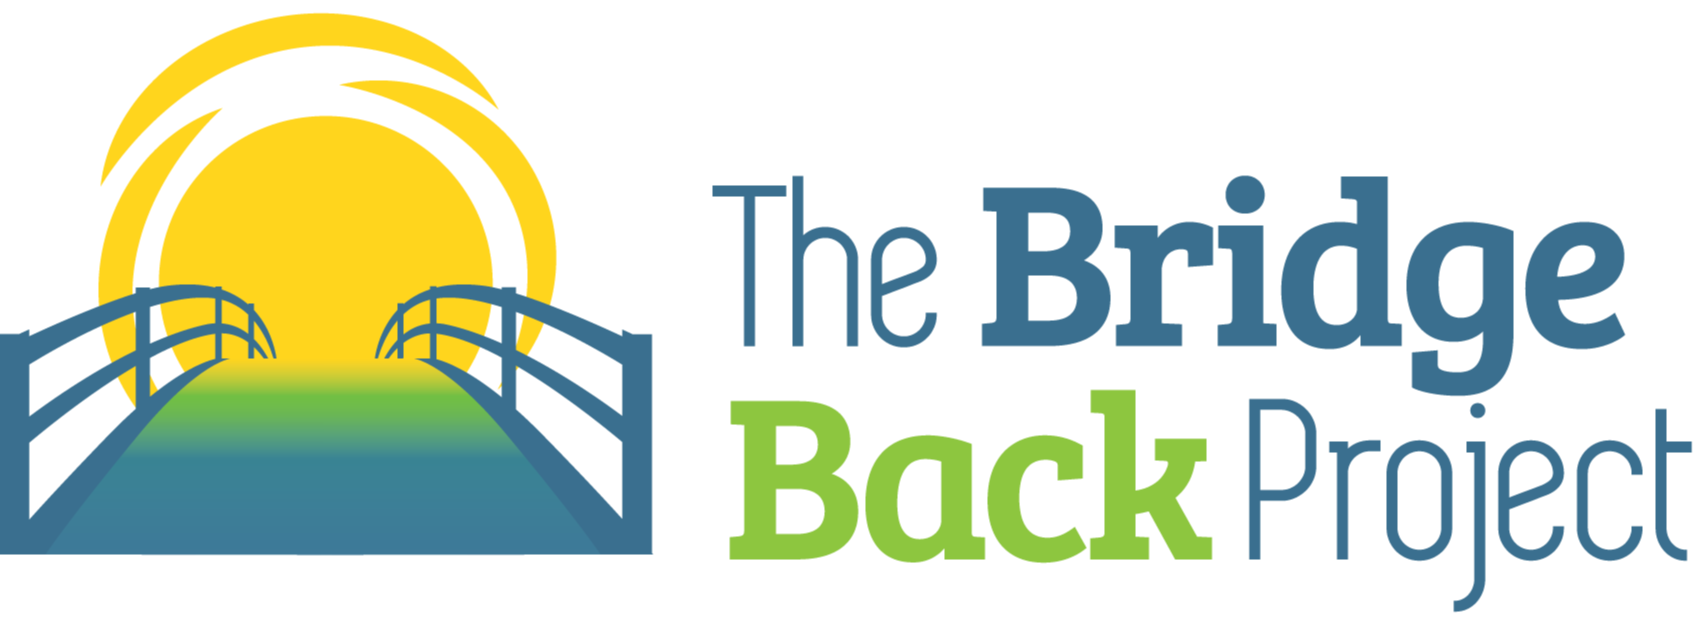 The Bridge Back Project logo